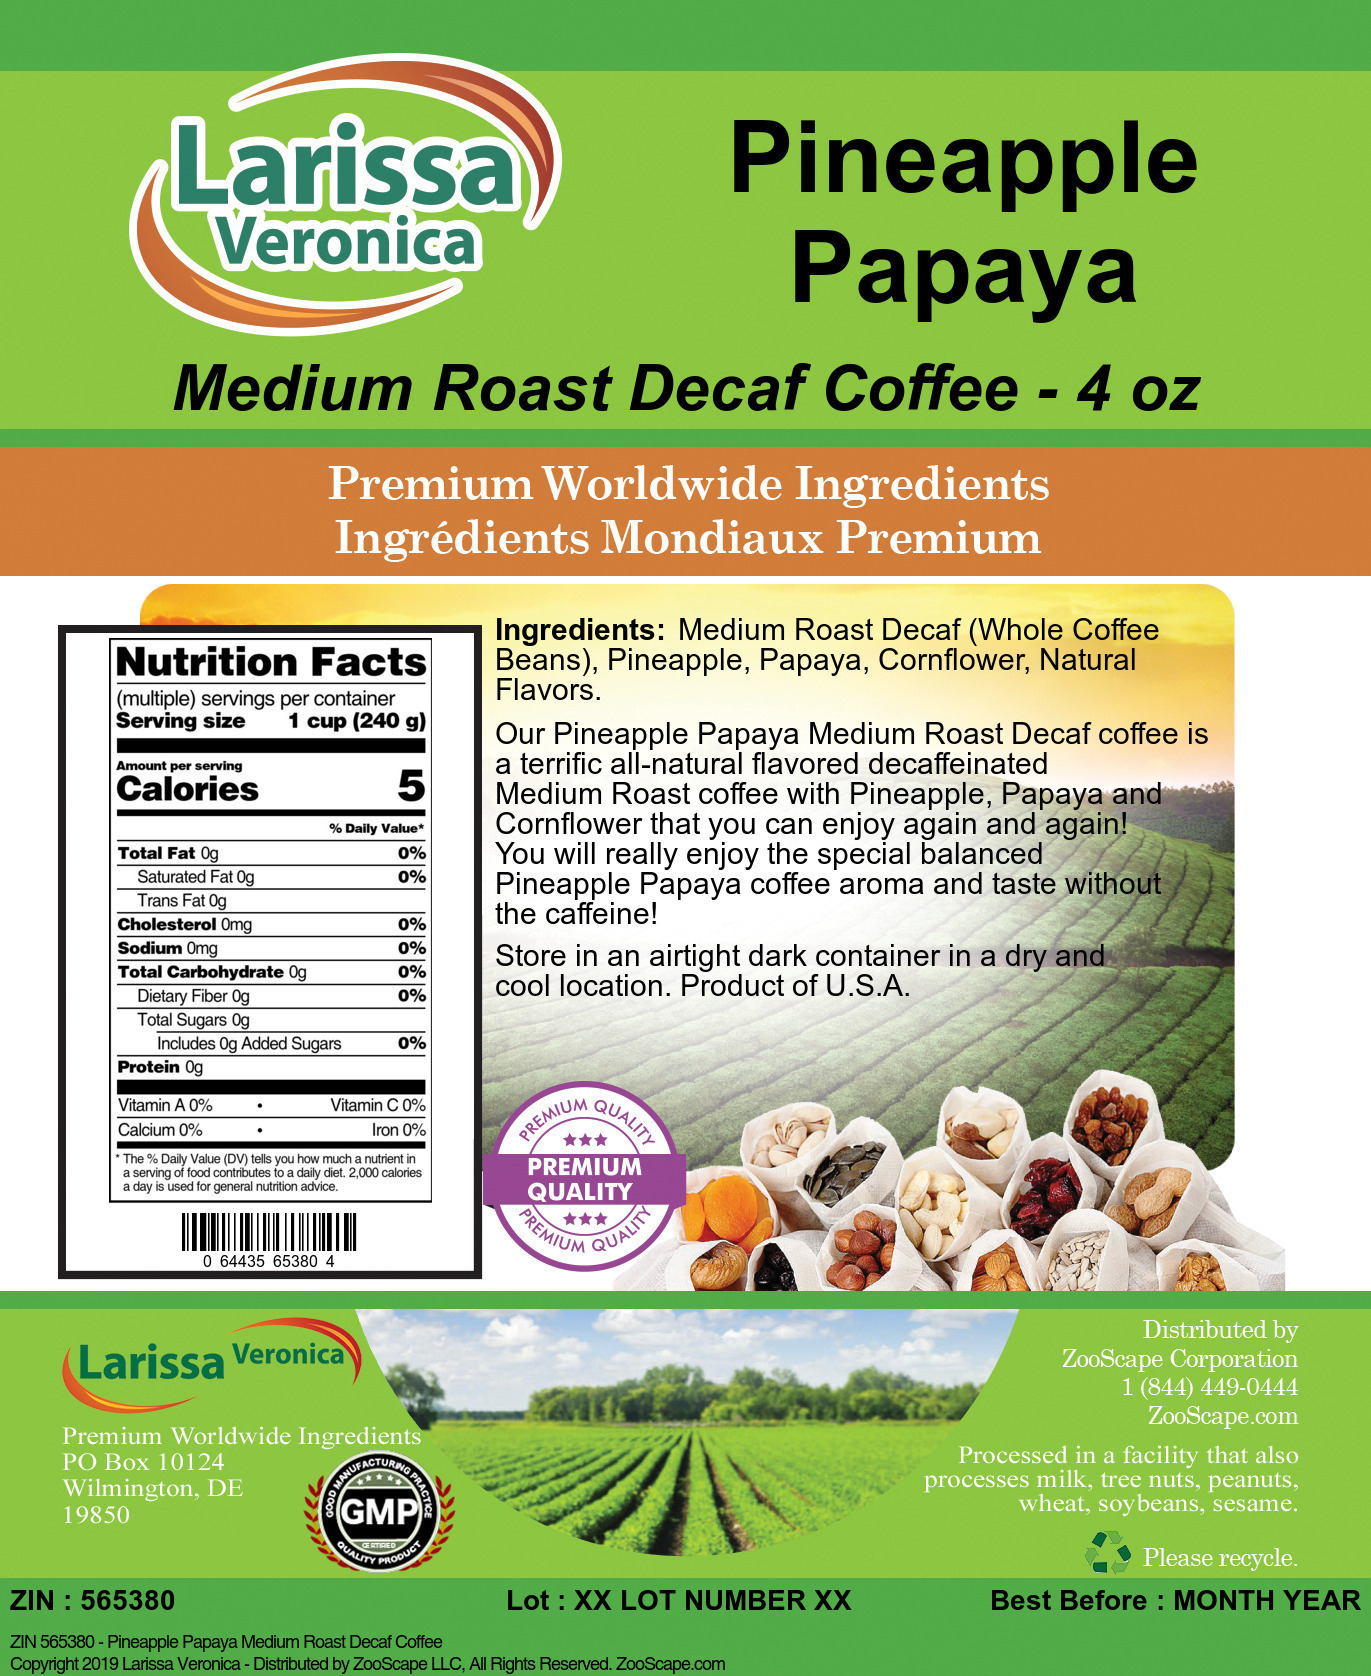 Pineapple Papaya Medium Roast Decaf Coffee - Label